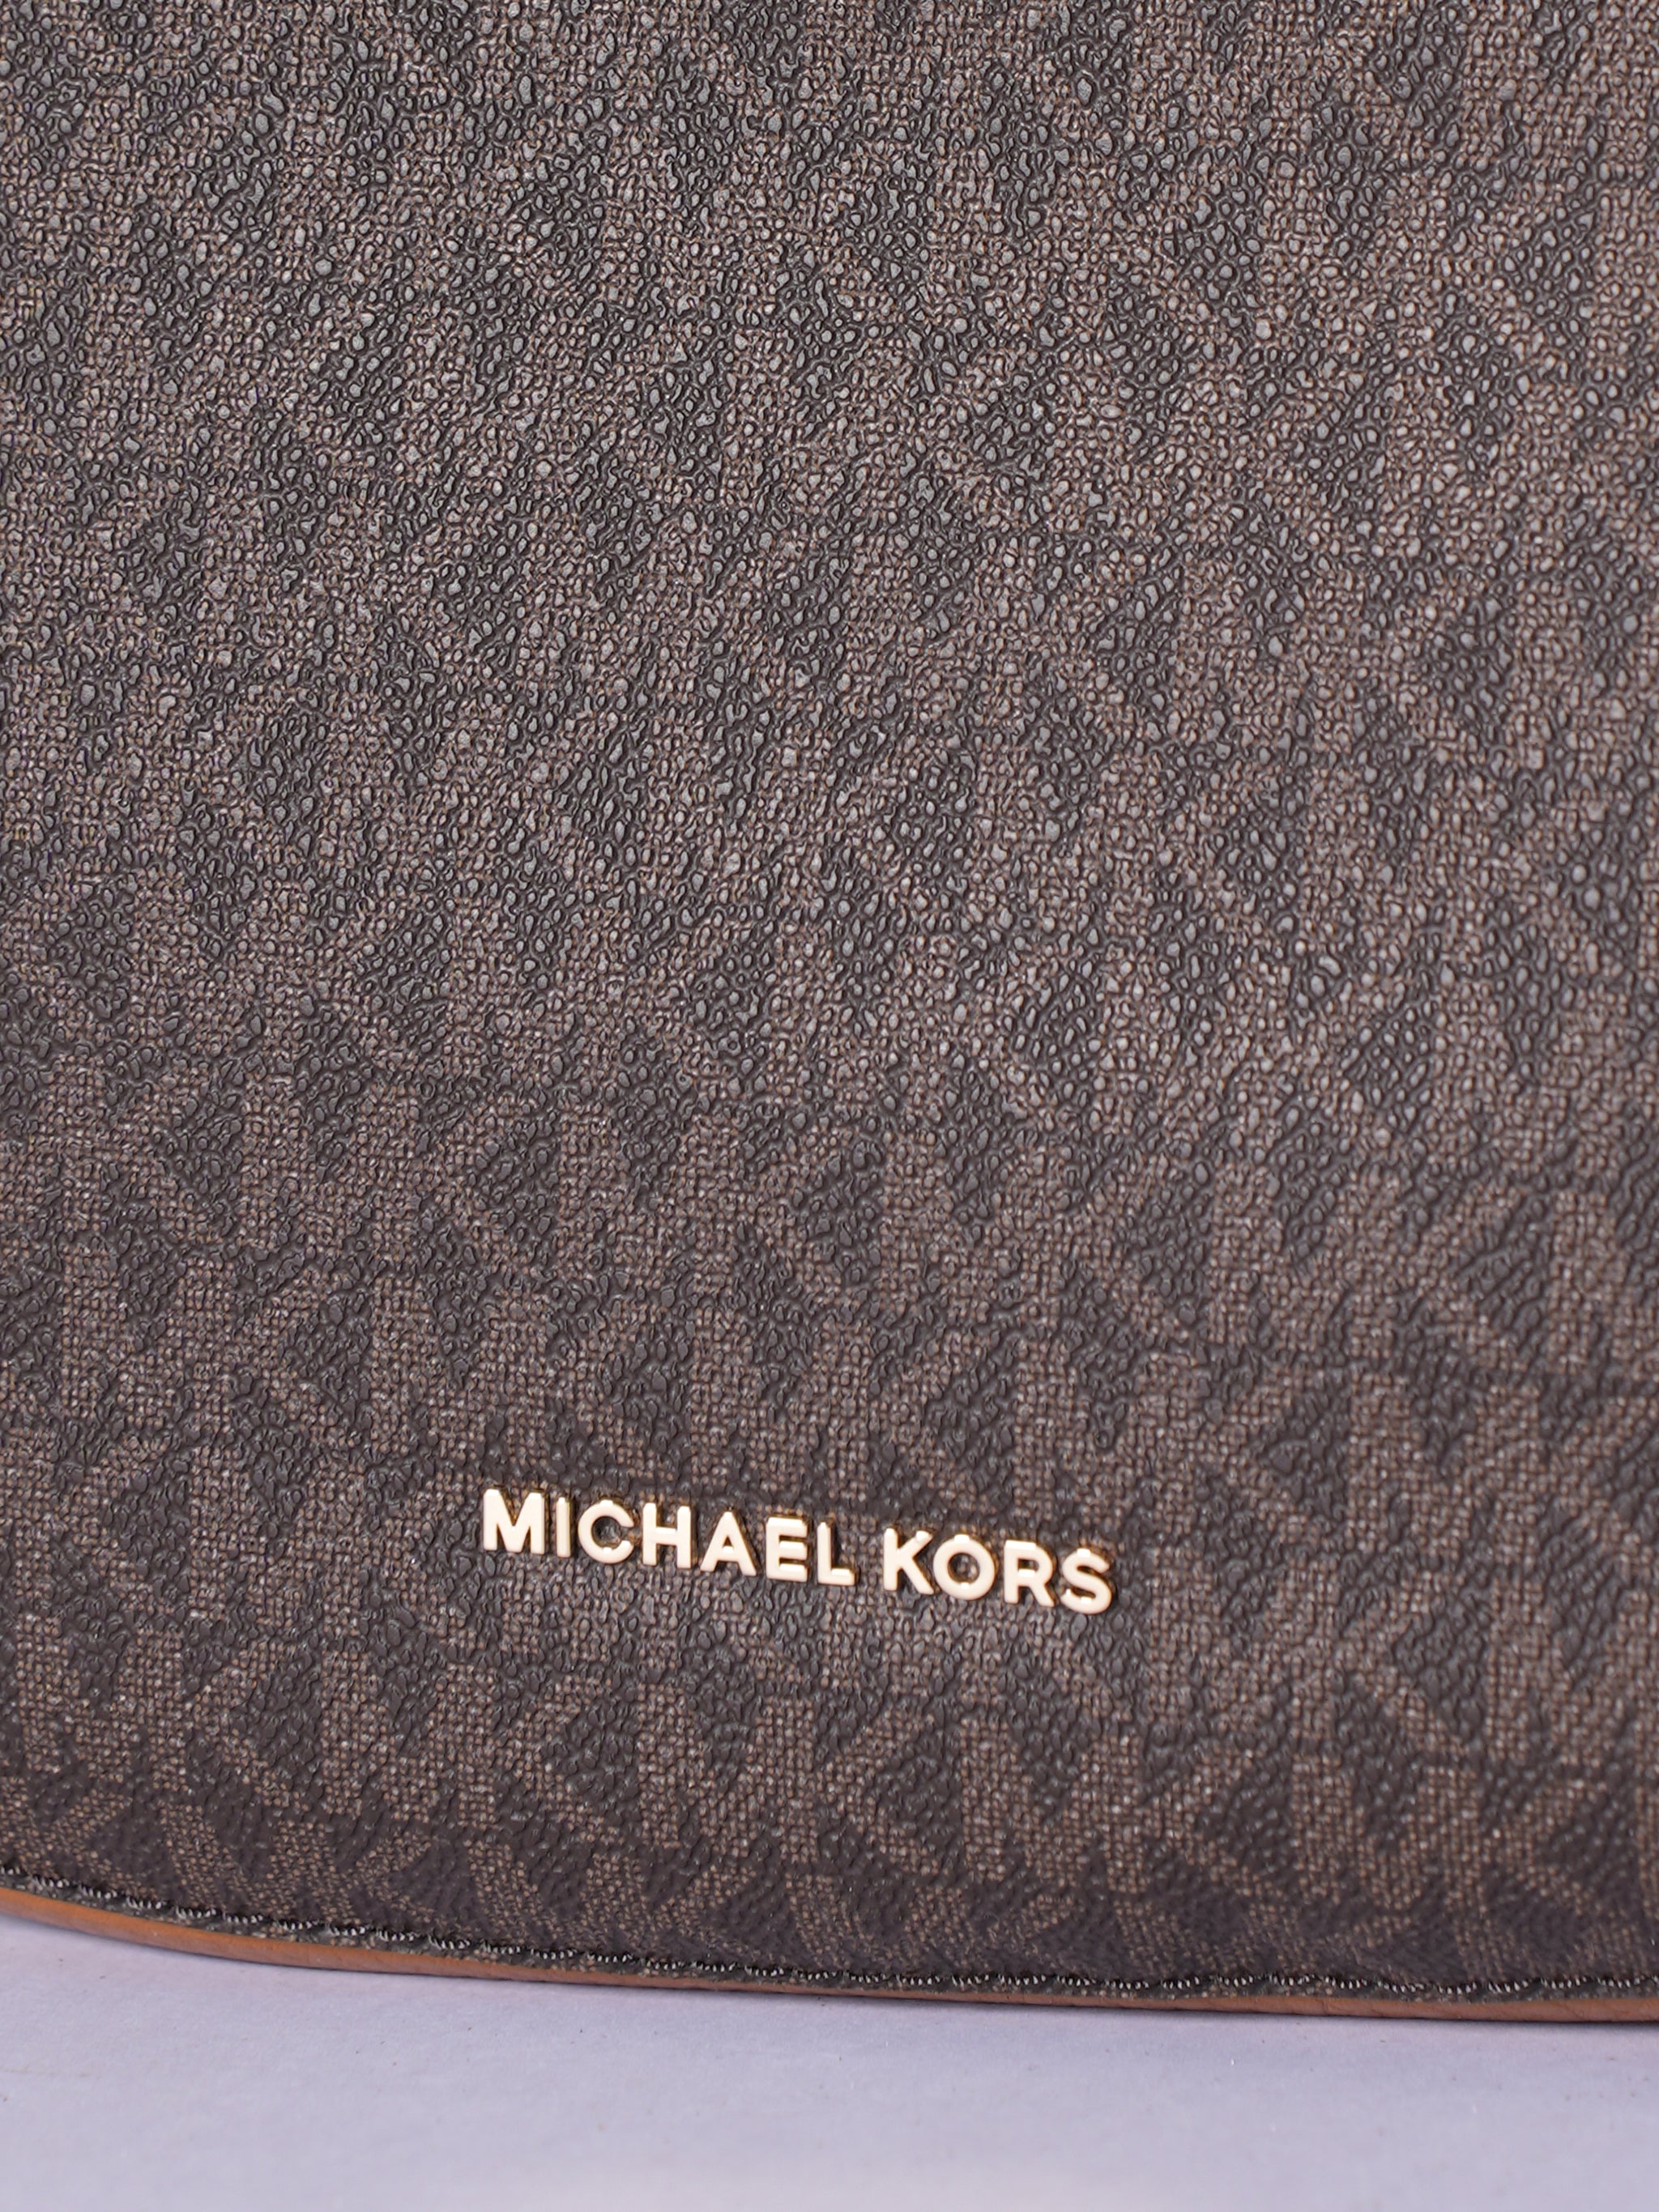 New Michael Kors lydia Hobo Bag